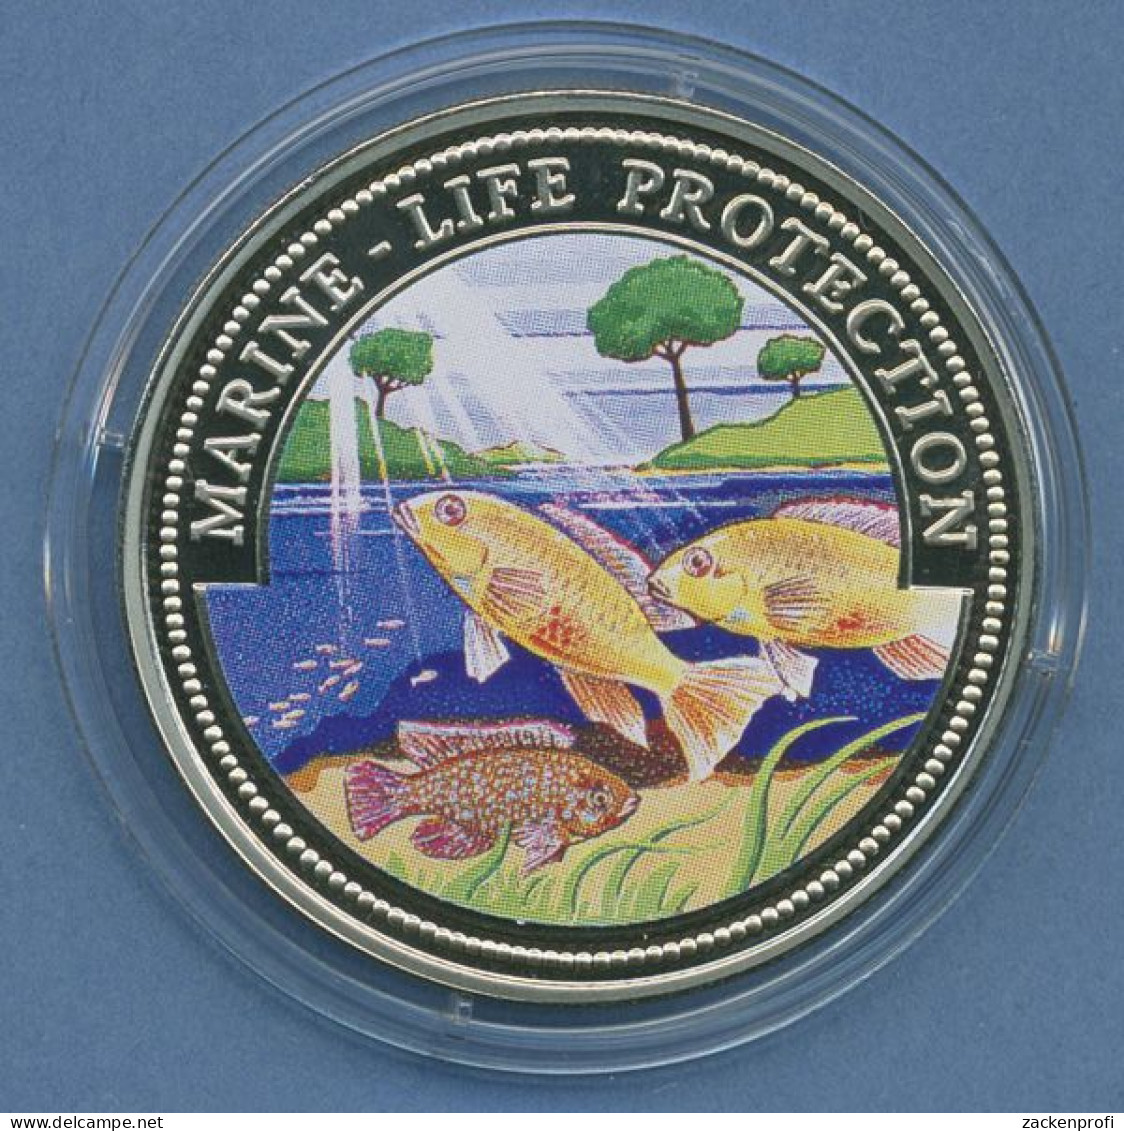 Liberia 1 Dollar 1999 Mereresschutz Fische, Farbig, KM 571 PP In Kapsel (m4568) - Liberia